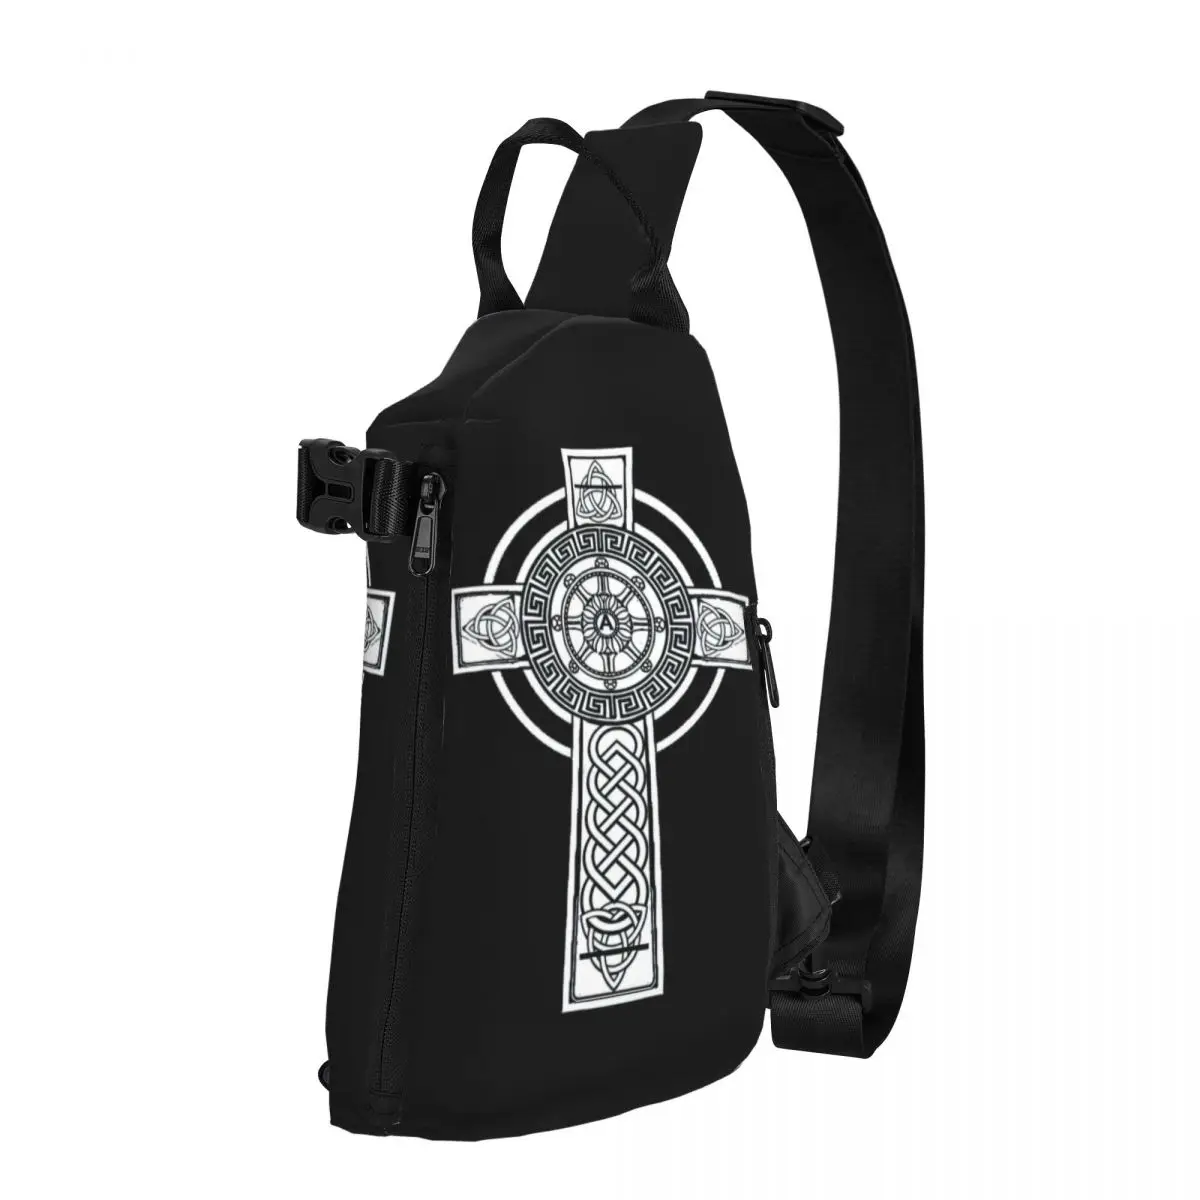 Magical Sacred Cross Shoulder Bags Chest Cross Chest Bag Diagonally Casual Messenger Bag Travel Handbag